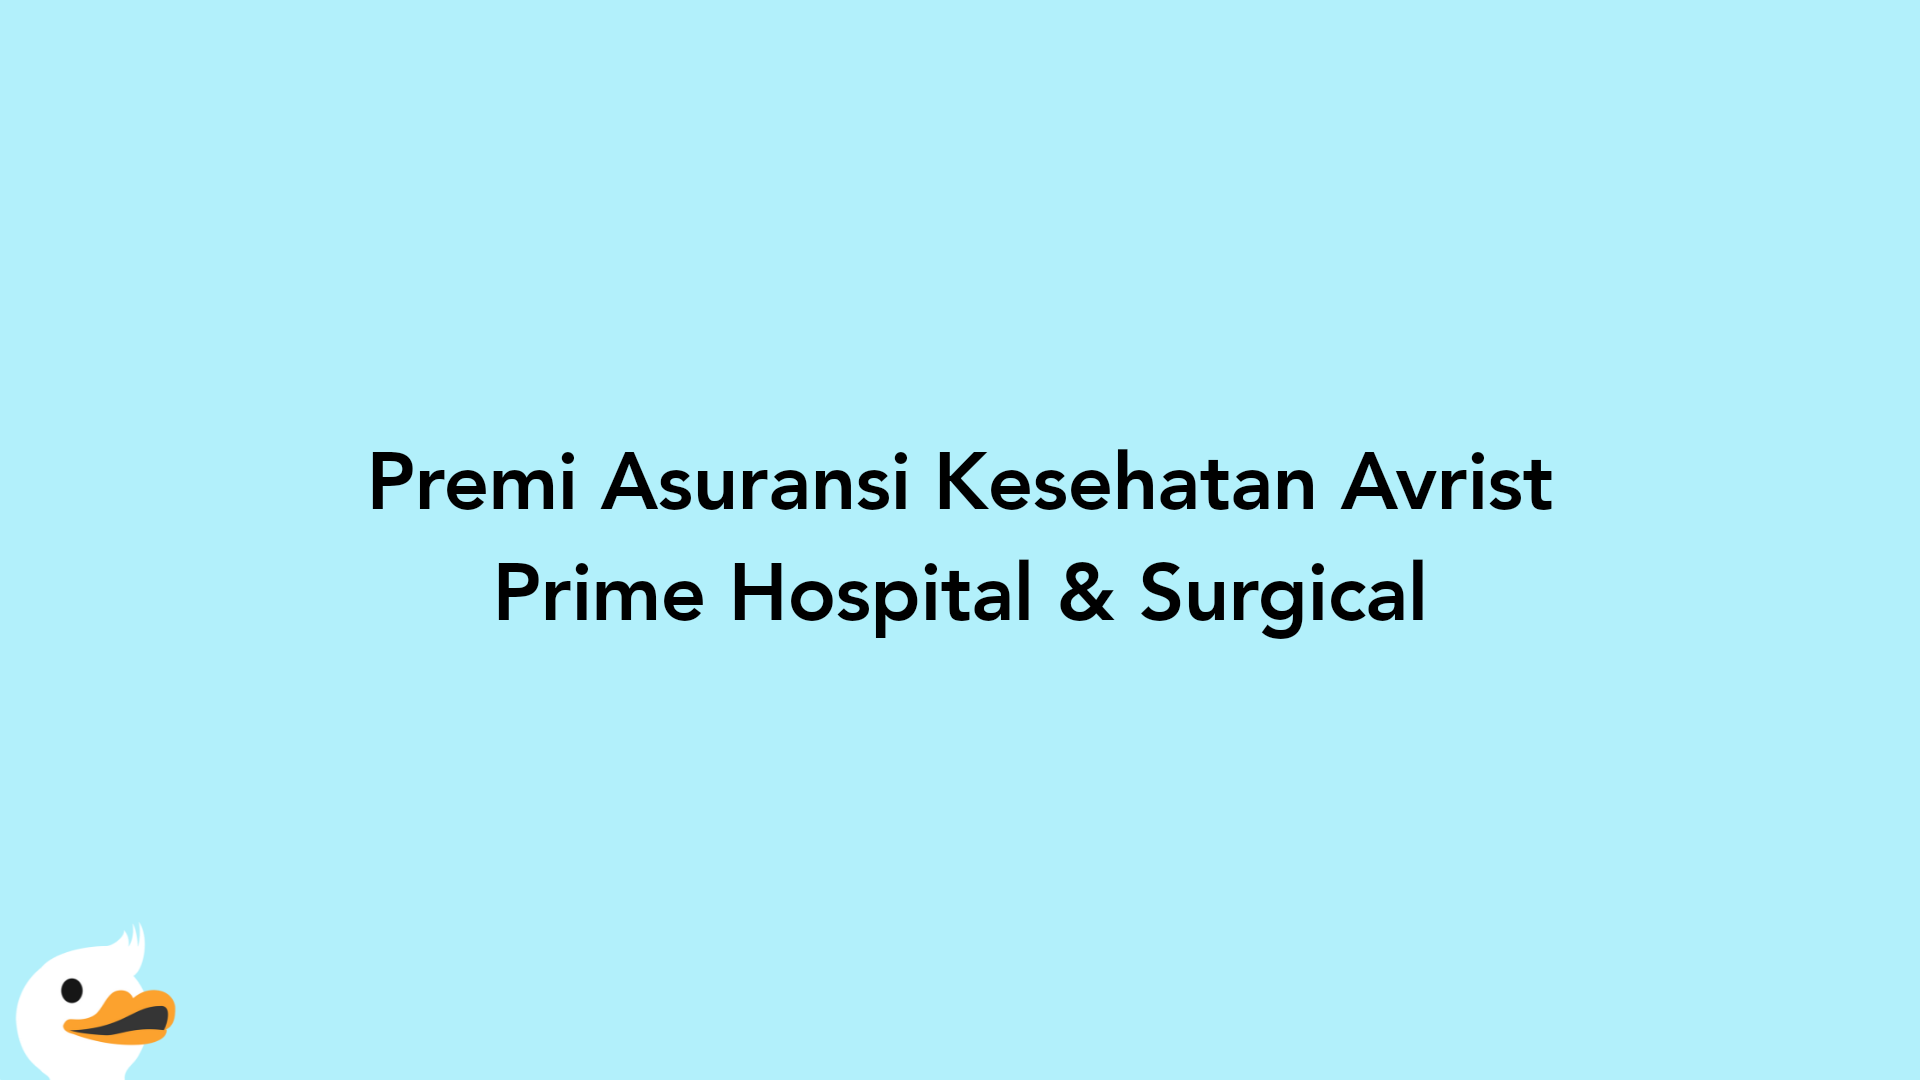 Premi Asuransi Kesehatan Avrist Prime Hospital & Surgical